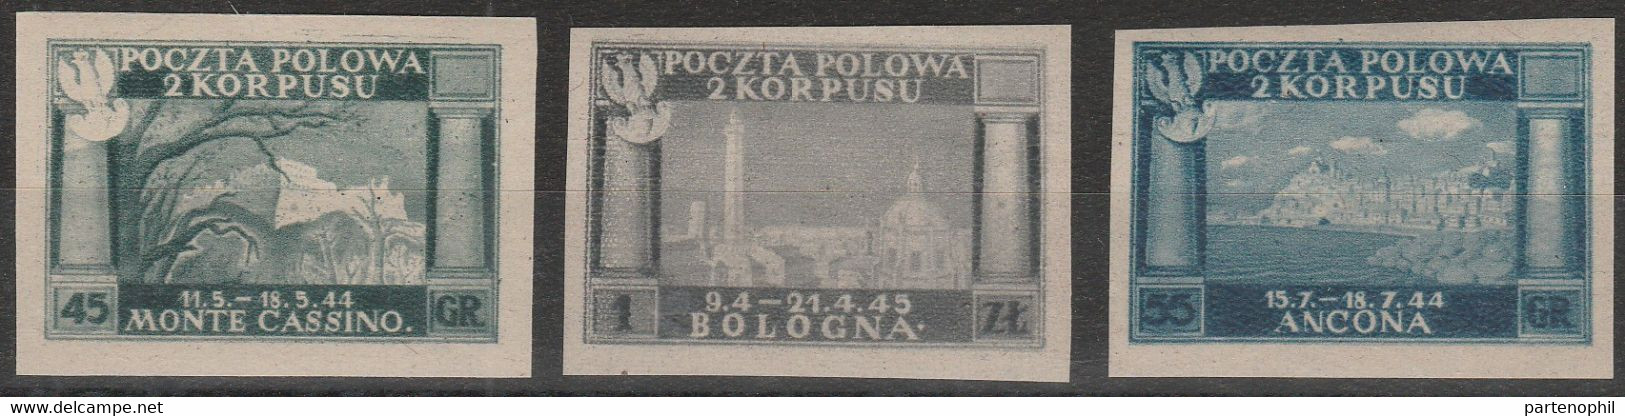 257 - Corpo Polacco  1946 - Vittorie Polacche 1A/3A. Cat. € 650,00. SPL - 1946-47 Période Corpo Polacco